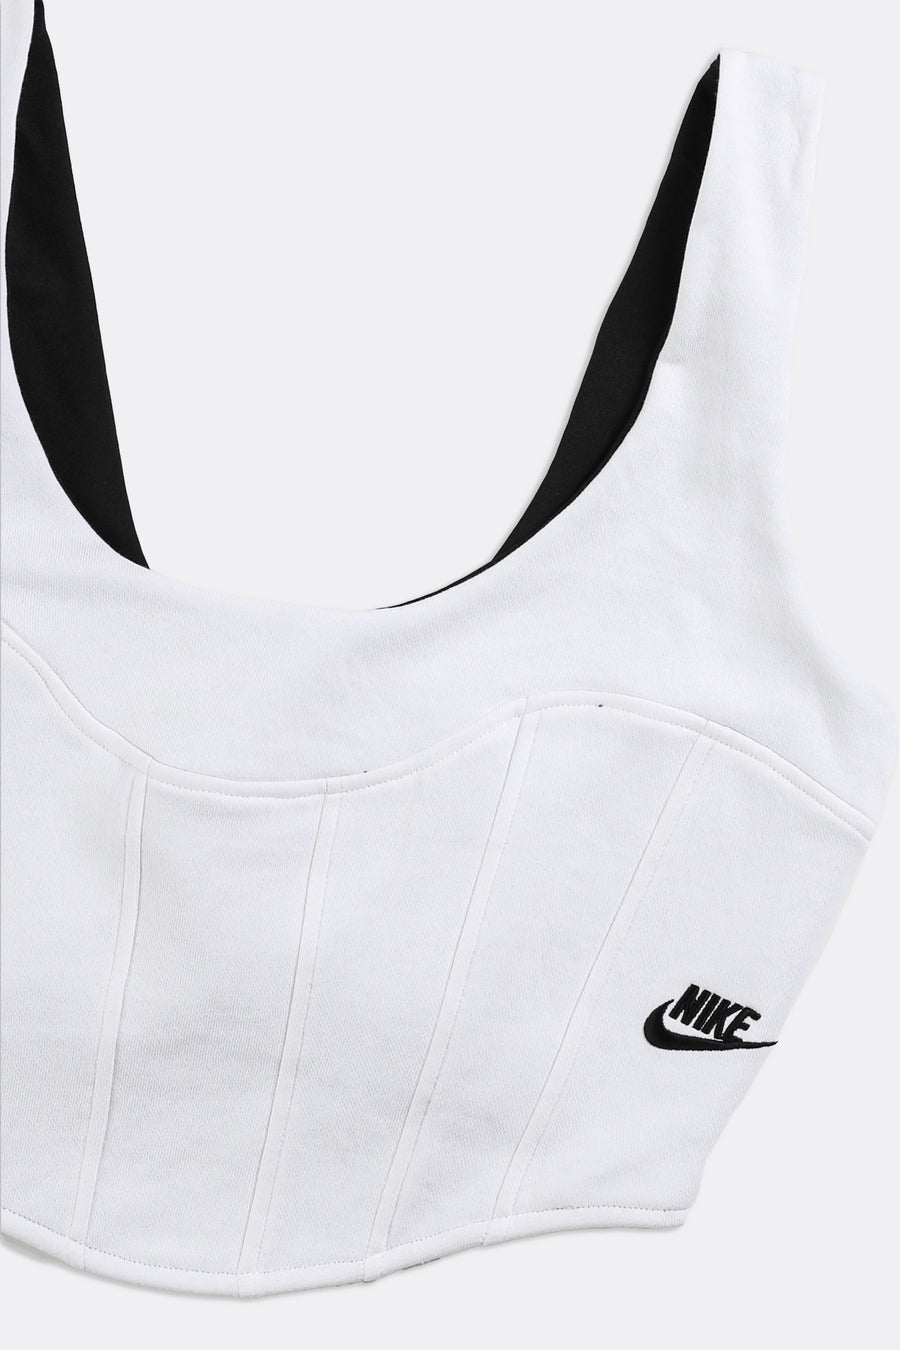 Rework Nike Sweatshirt Bustier - XS, S, M, L, XL